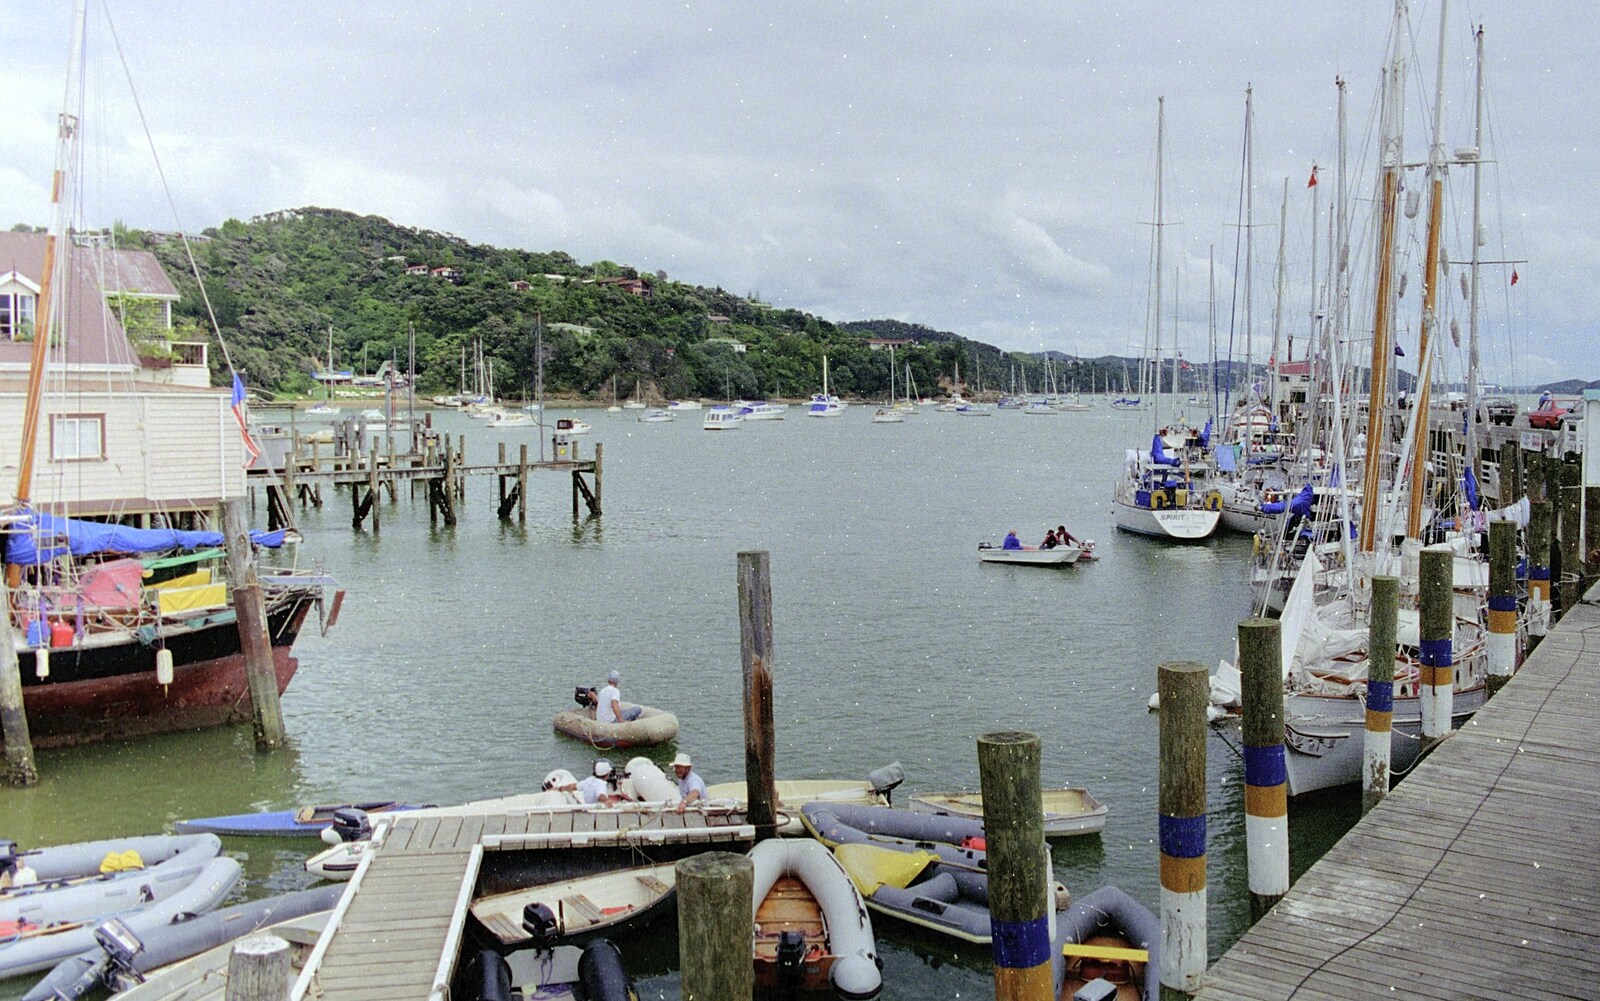 A marina somewhere from The Bay Of Islands, New Zealand - 29th November 1992